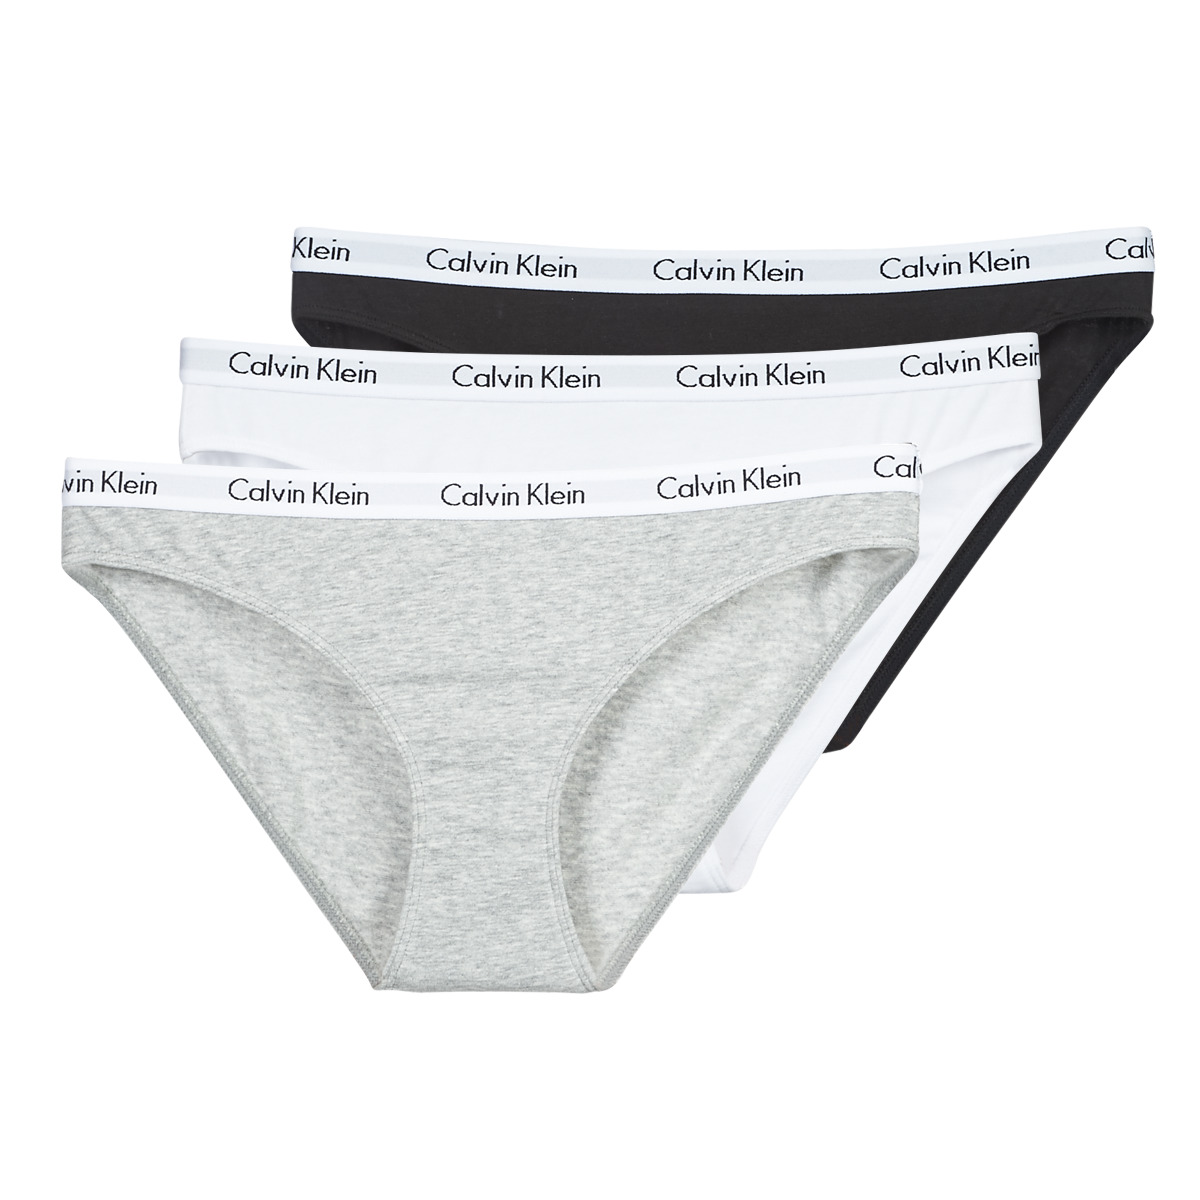 Calvin Klein Jeans CAROUSEL BIKINI X 3 Sort / Hvid / Grå / Marmoreret -  Undertøj Trusser Dame 513,00 Kr